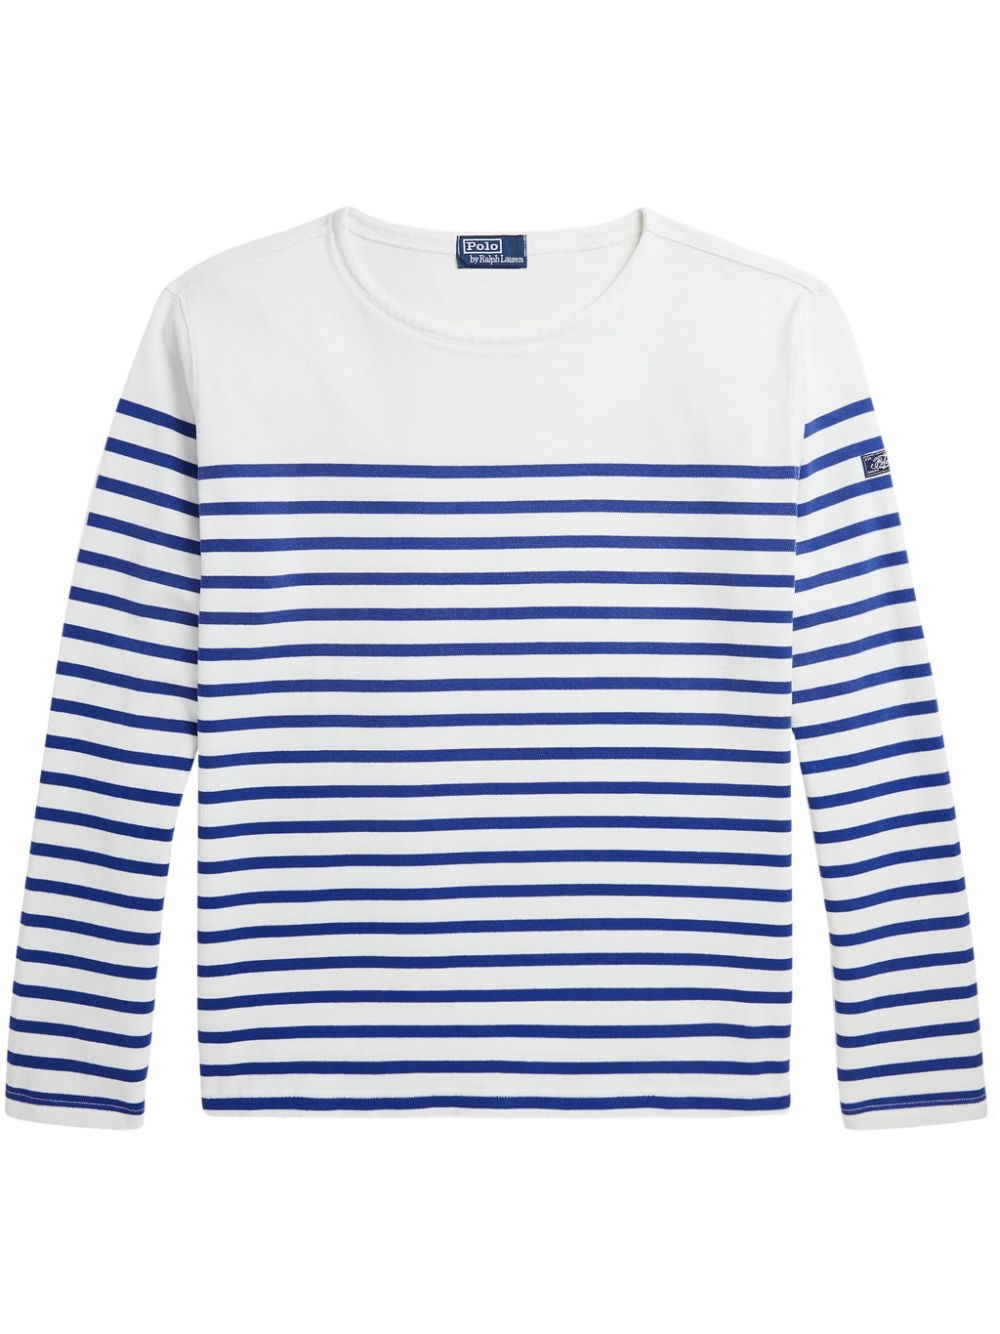 Polo Ralph Lauren striped boating jersey T-shirt - White von Polo Ralph Lauren